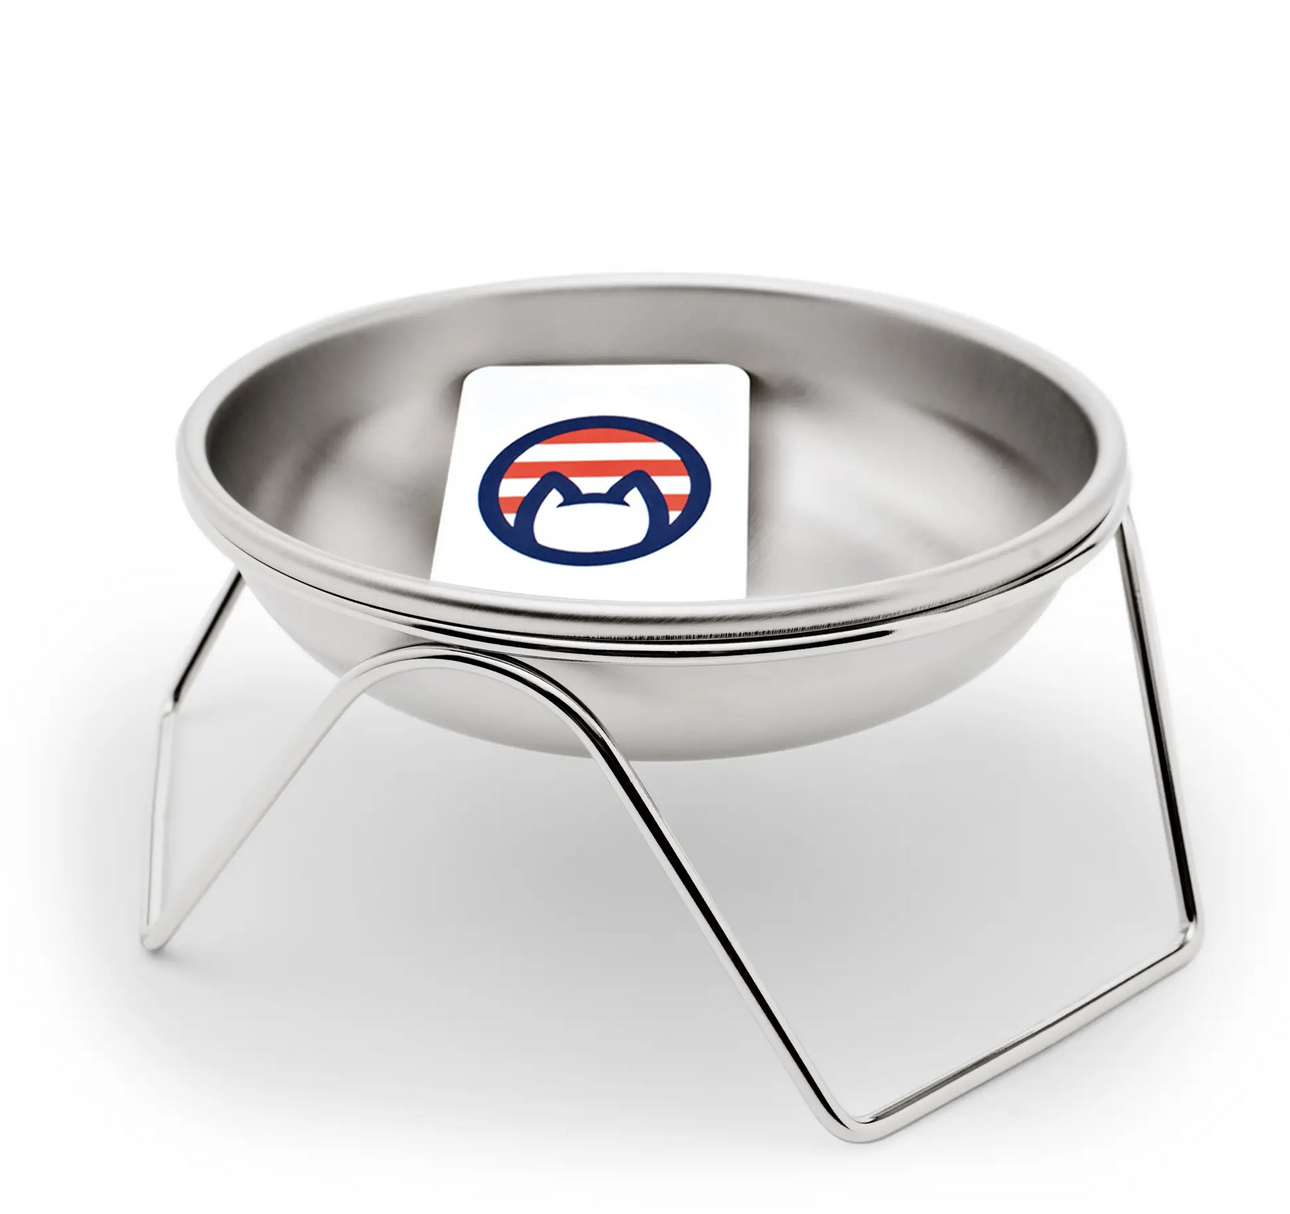 https://cdn.shoplightspeed.com/shops/604721/files/47089878/americat-americat-stainless-steel-cat-bowl-stand.jpg